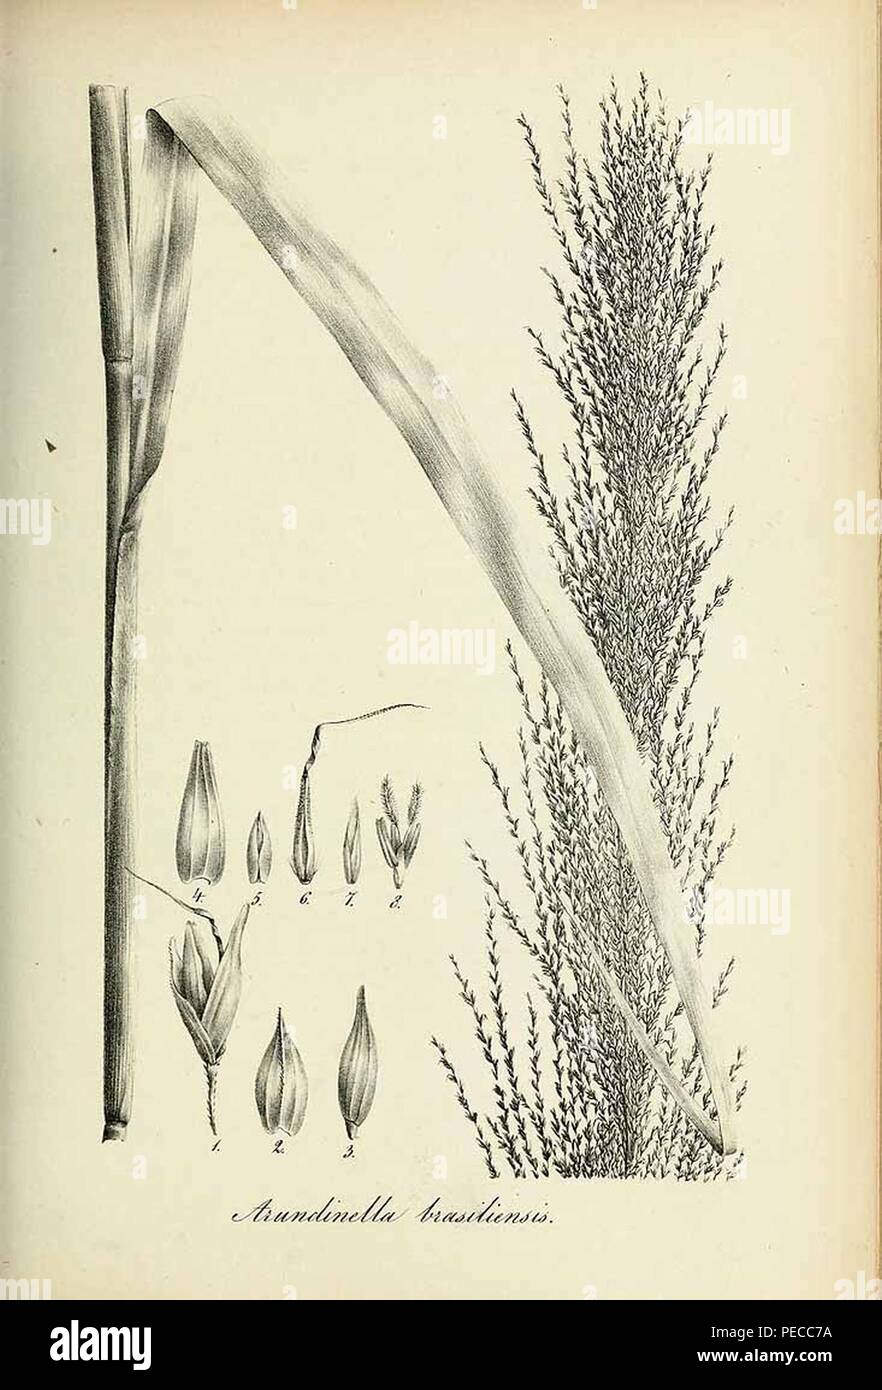 Arundinella brasiliensis - Species graminum - Volume 3. Stock Photo